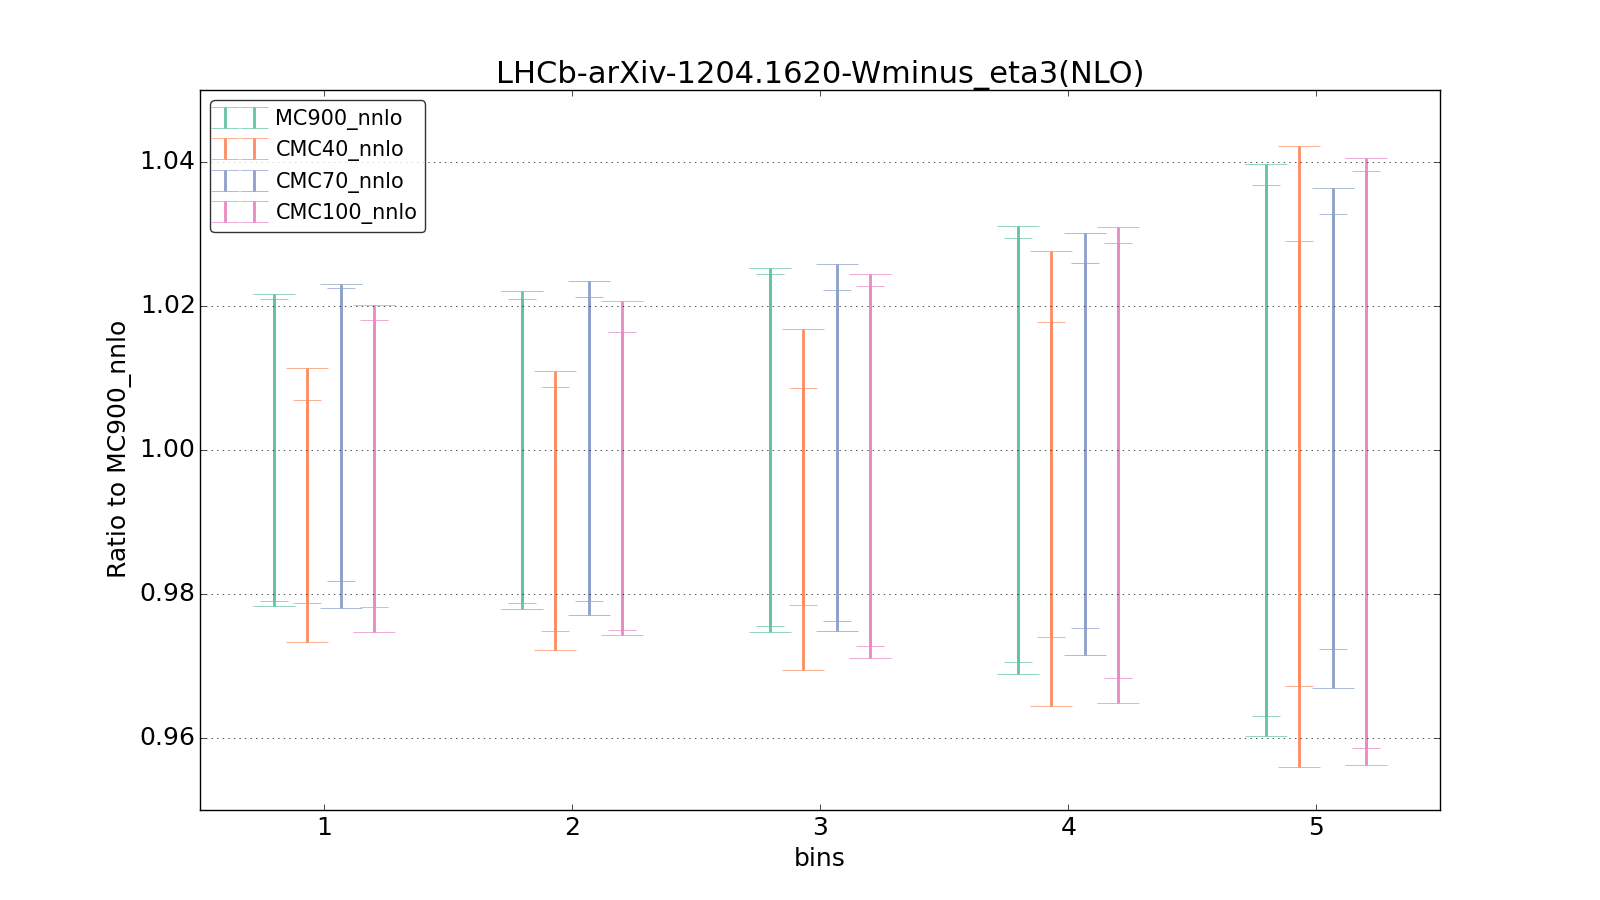 figure plots/CMCpheno/group_0_ciplot_LHCb-arXiv-12041620-Wminus_eta3(NLO).png